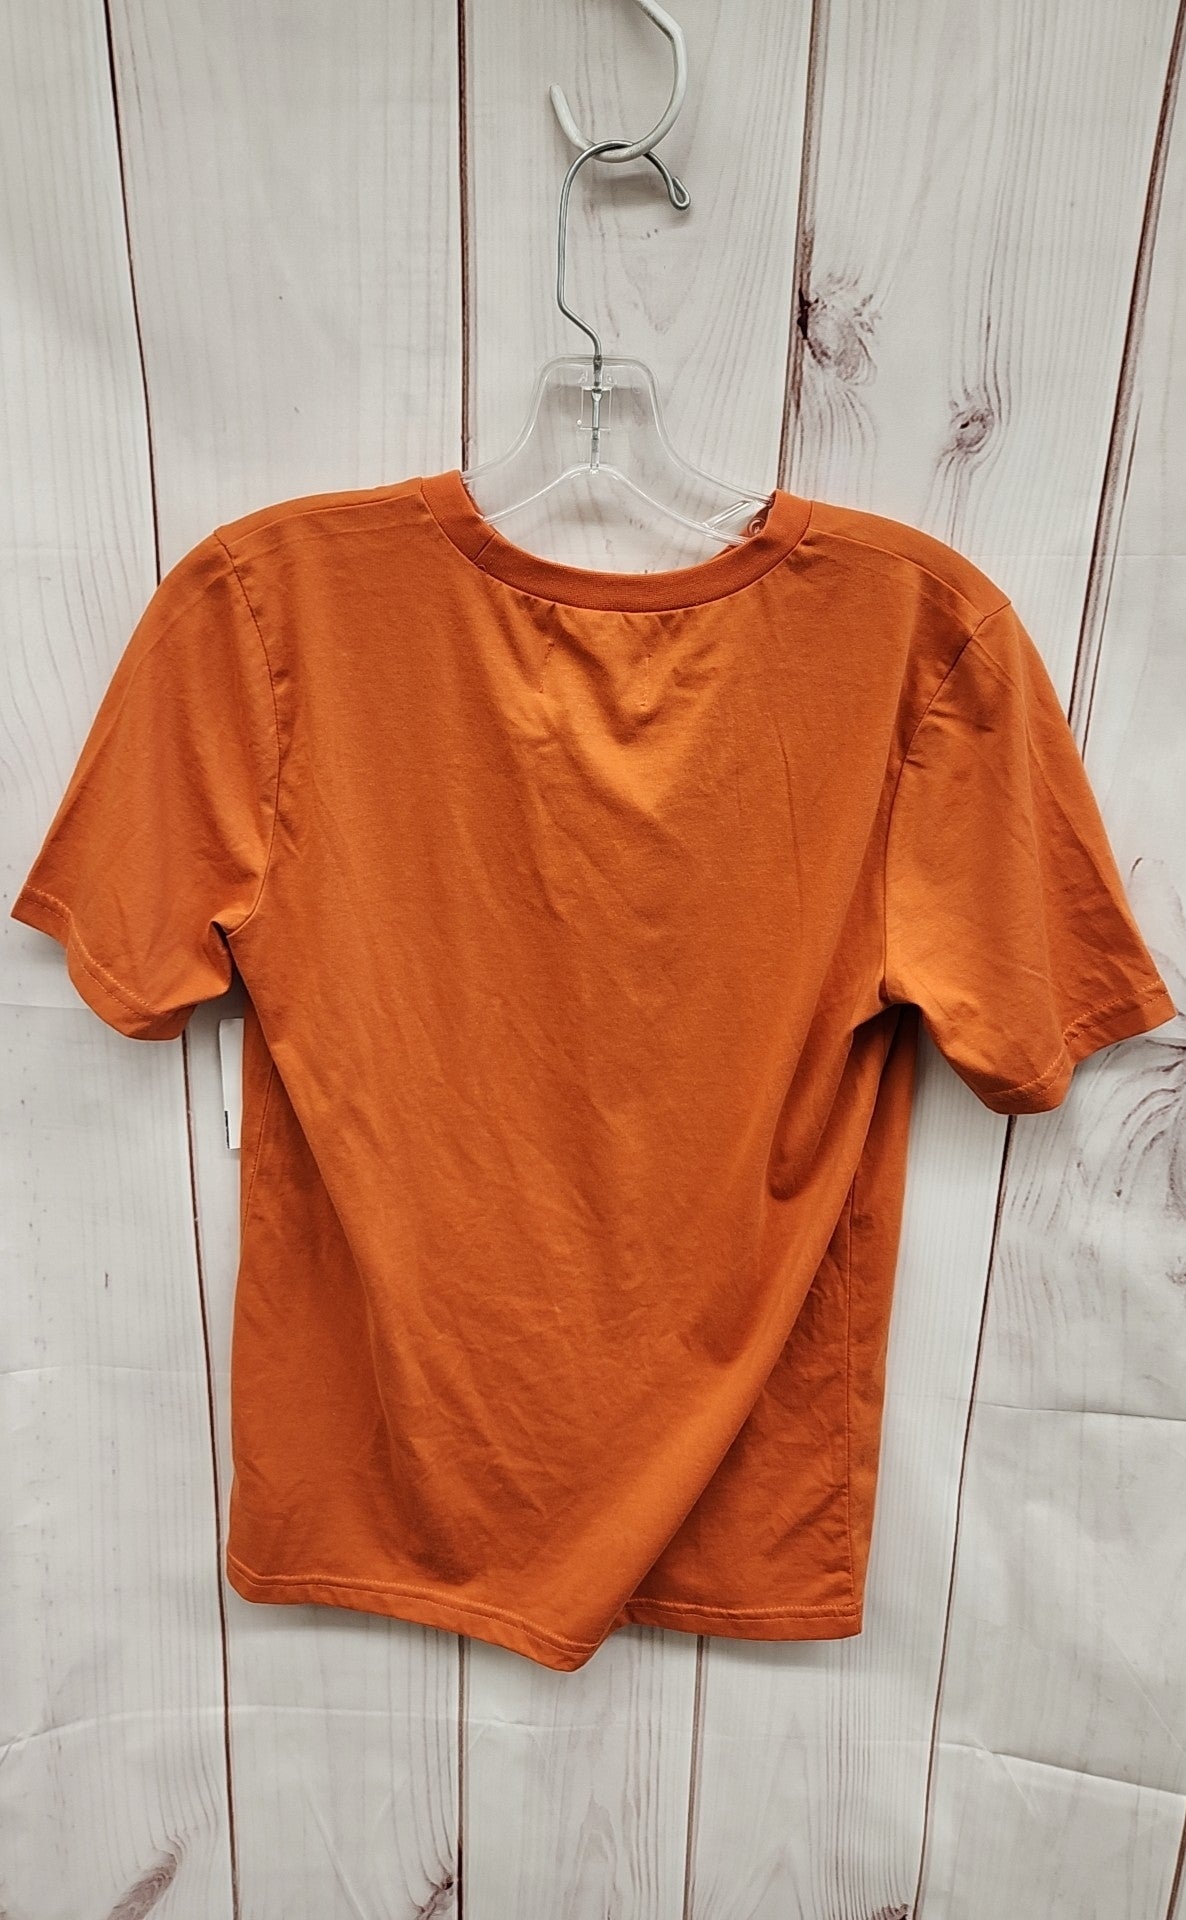 Nordstrom Boy's Size 14/16 Orange Shirt NWT